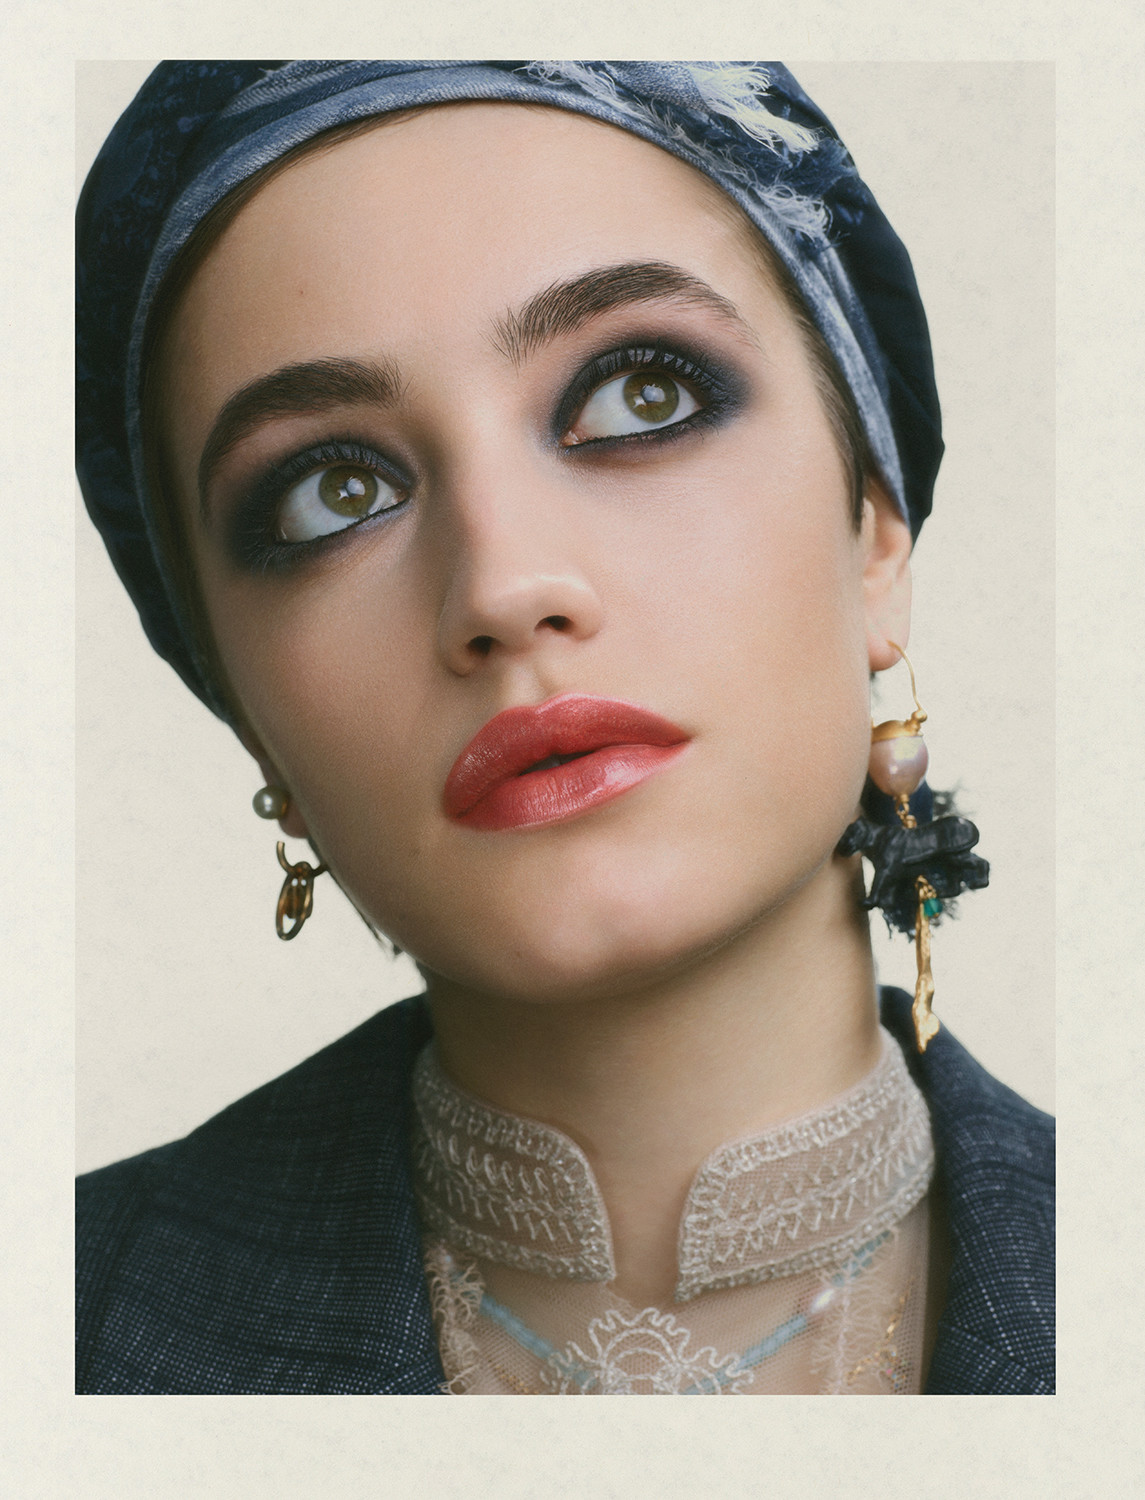 Dior Magazine, shot by Studio L'Etiquette - © artifices